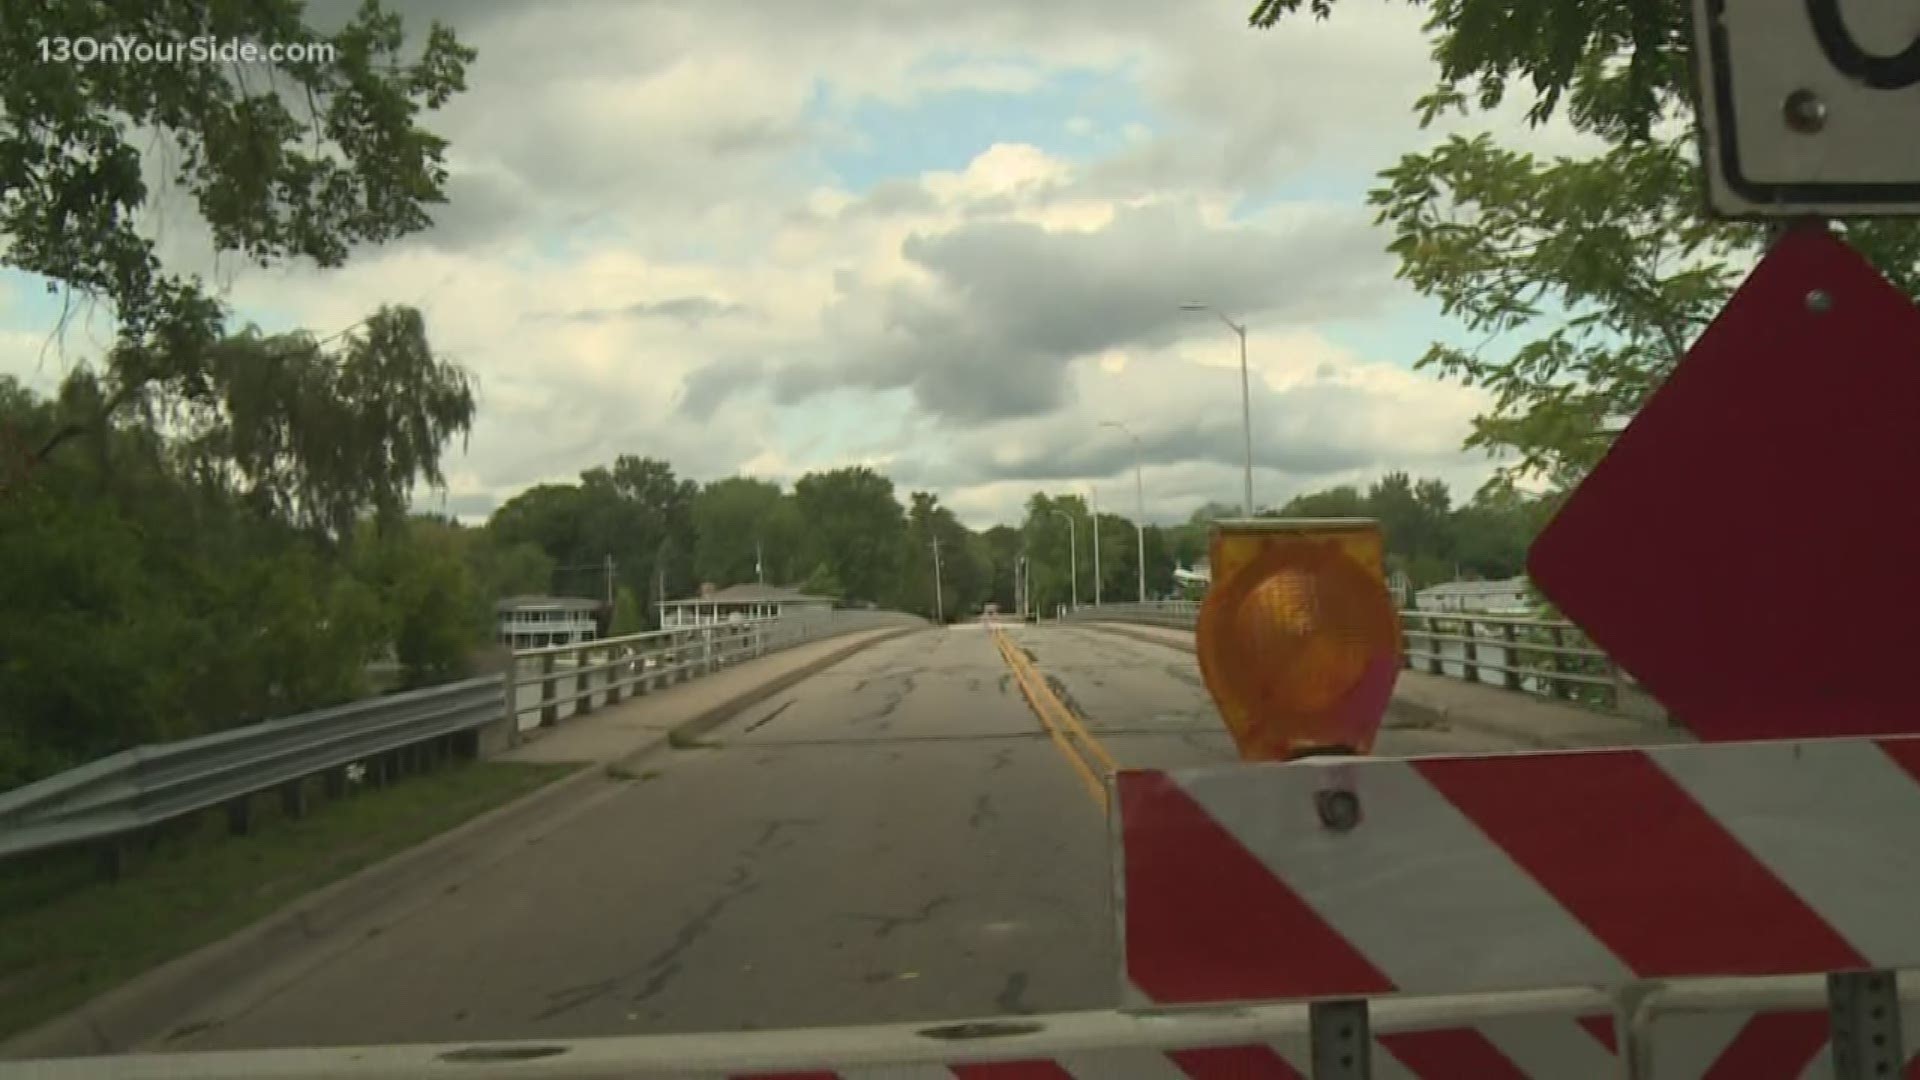 New inspection for Ferrysburg's Smith's Bridge complete